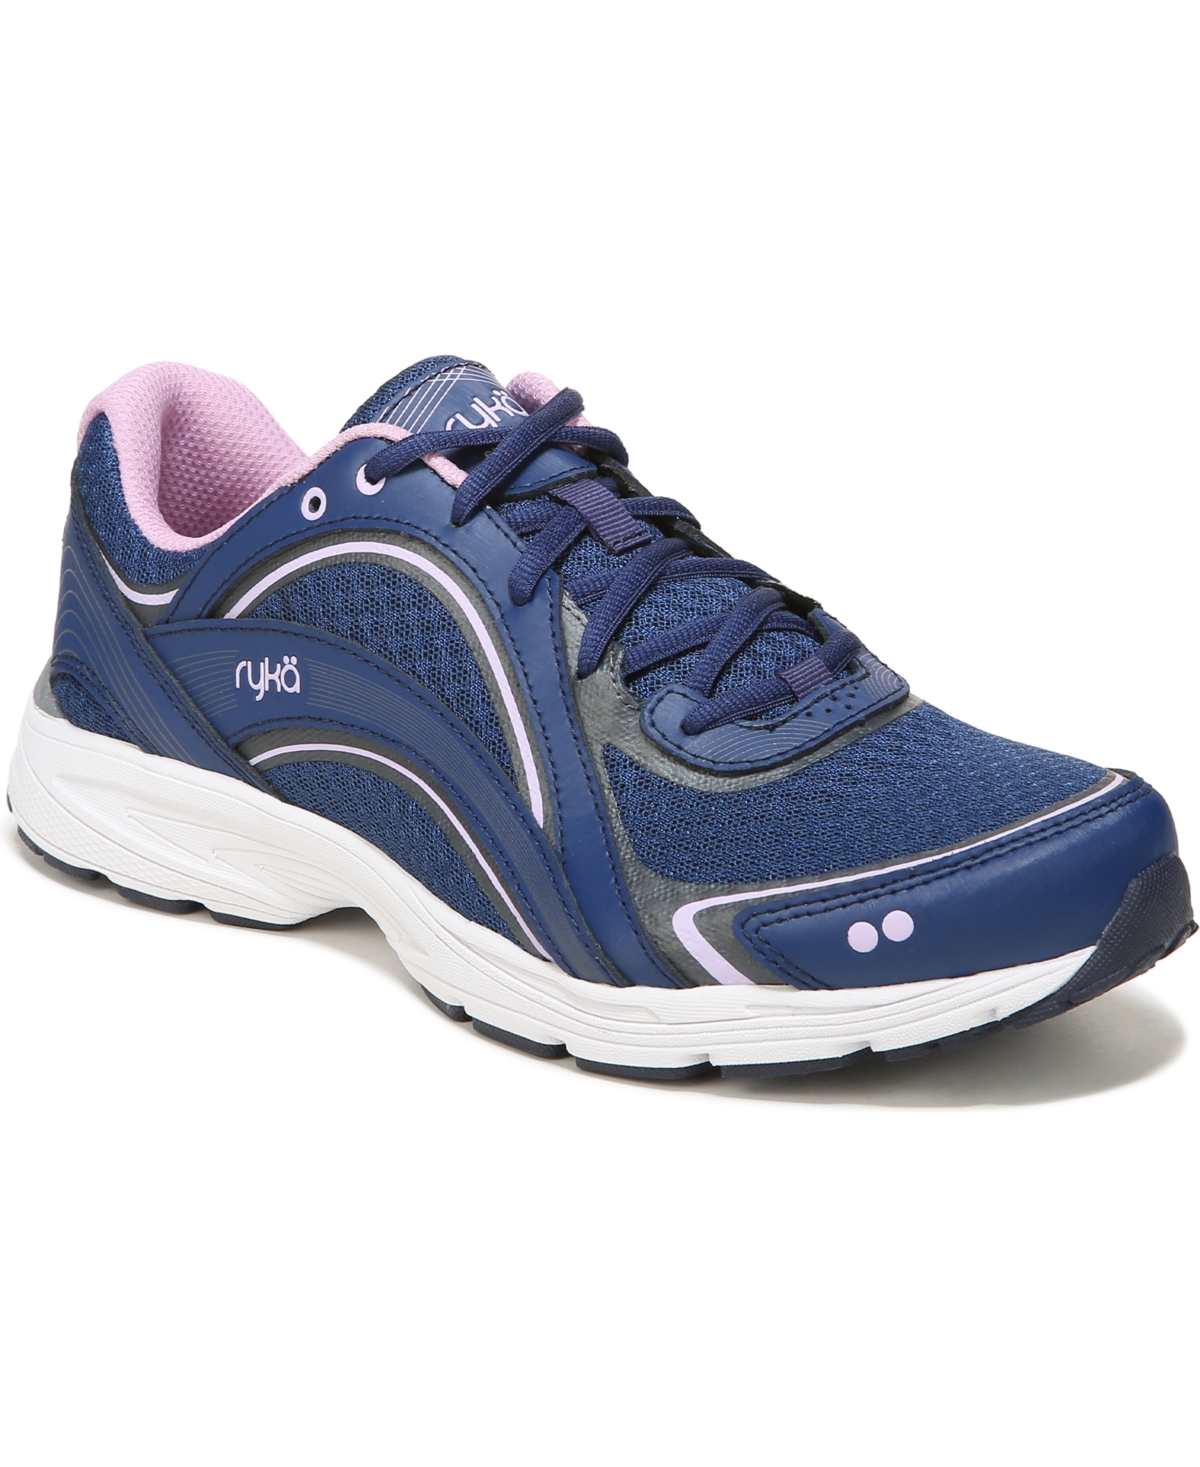 Women's Sky Walk Walking Shoes - Navy/Lavender Mesh/Leather